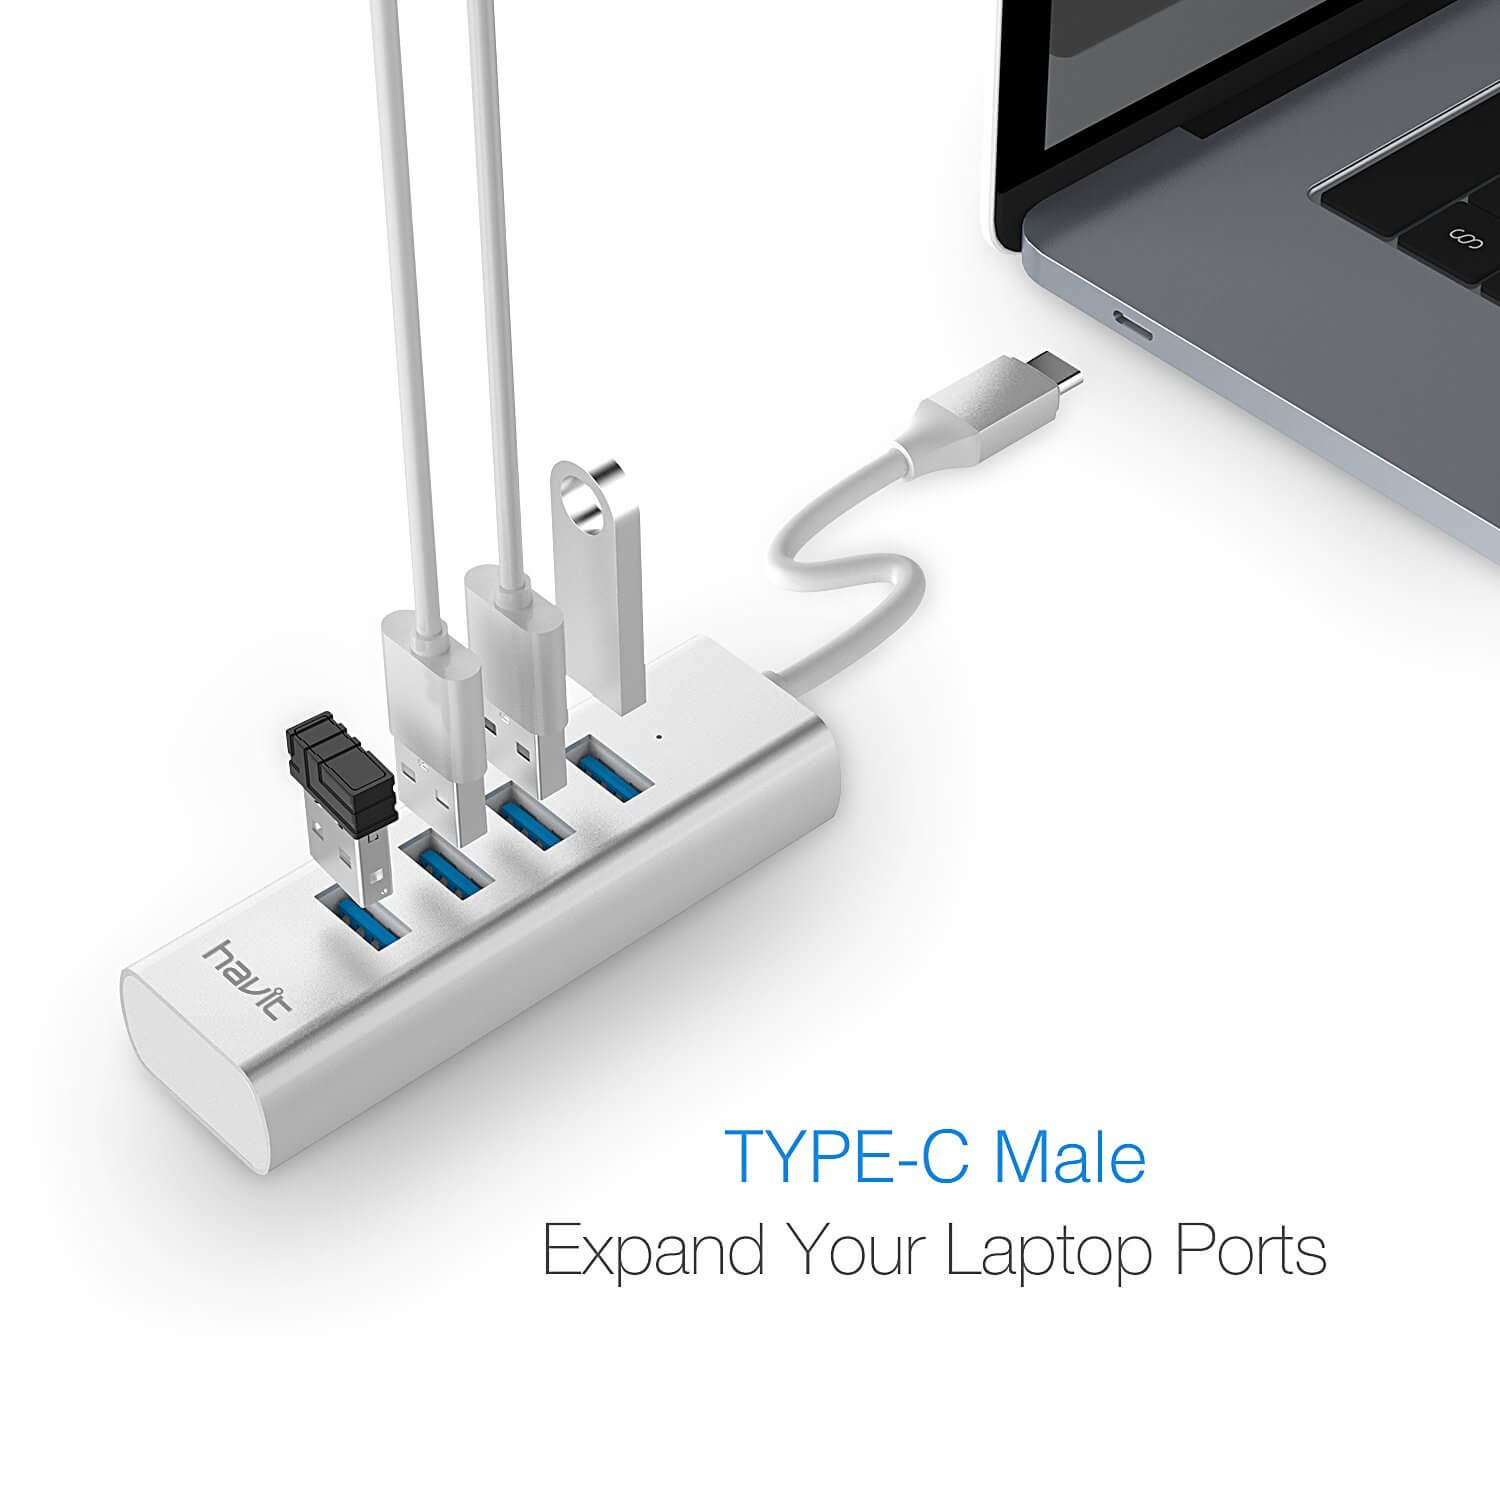 HAVIT T91 USB C to USB 3.0 Hub with TYPE-C PD Female port